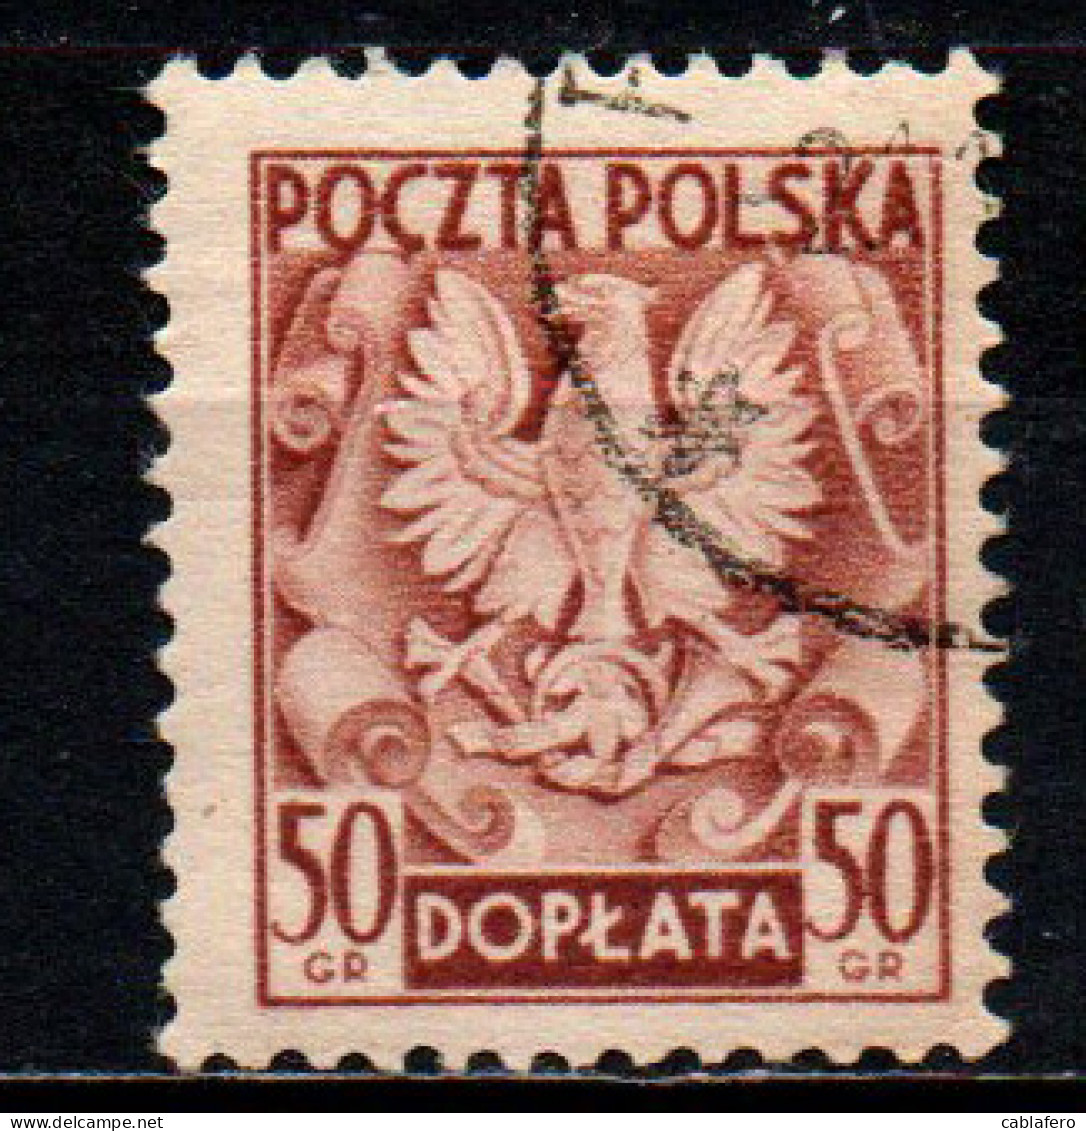 POLONIA - 1950 - Polish Eagle - USATO - Portomarken